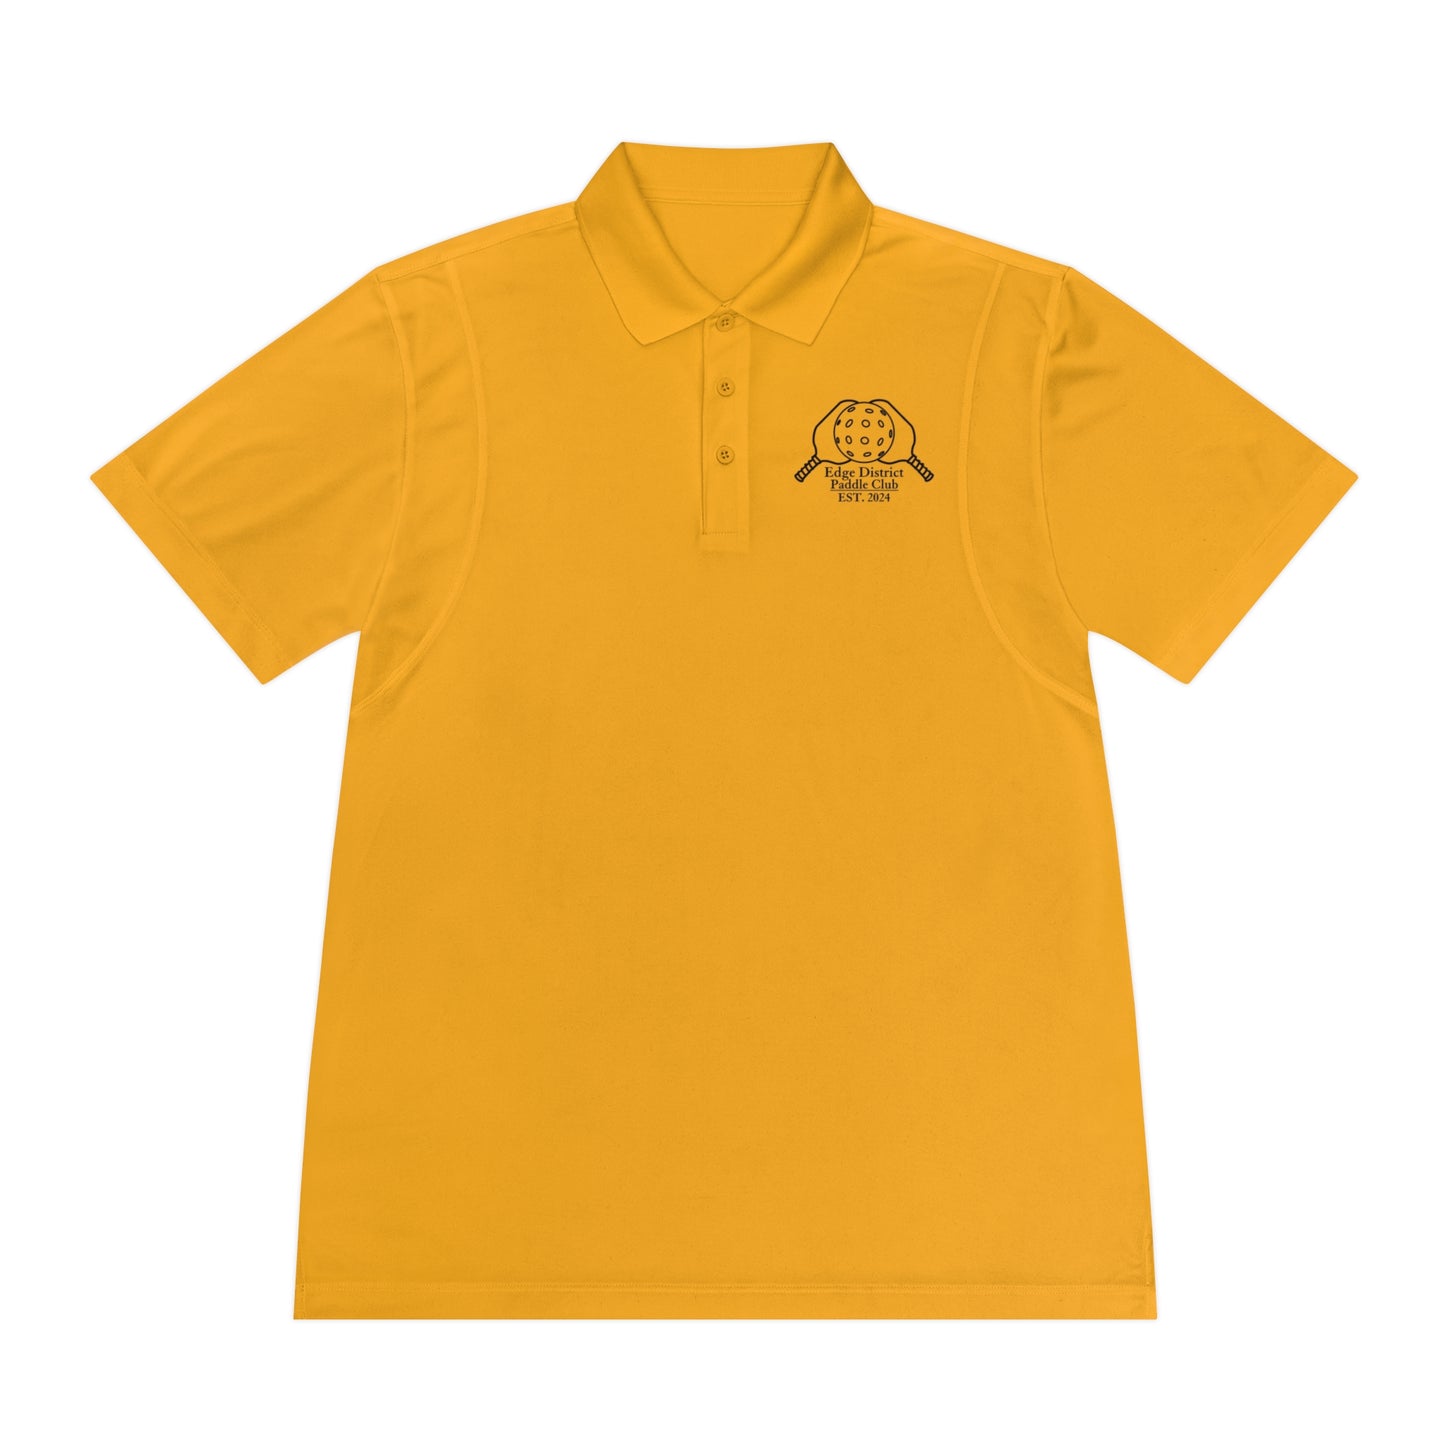 Edge District Paddle Club Men's Sport Polo Shirt